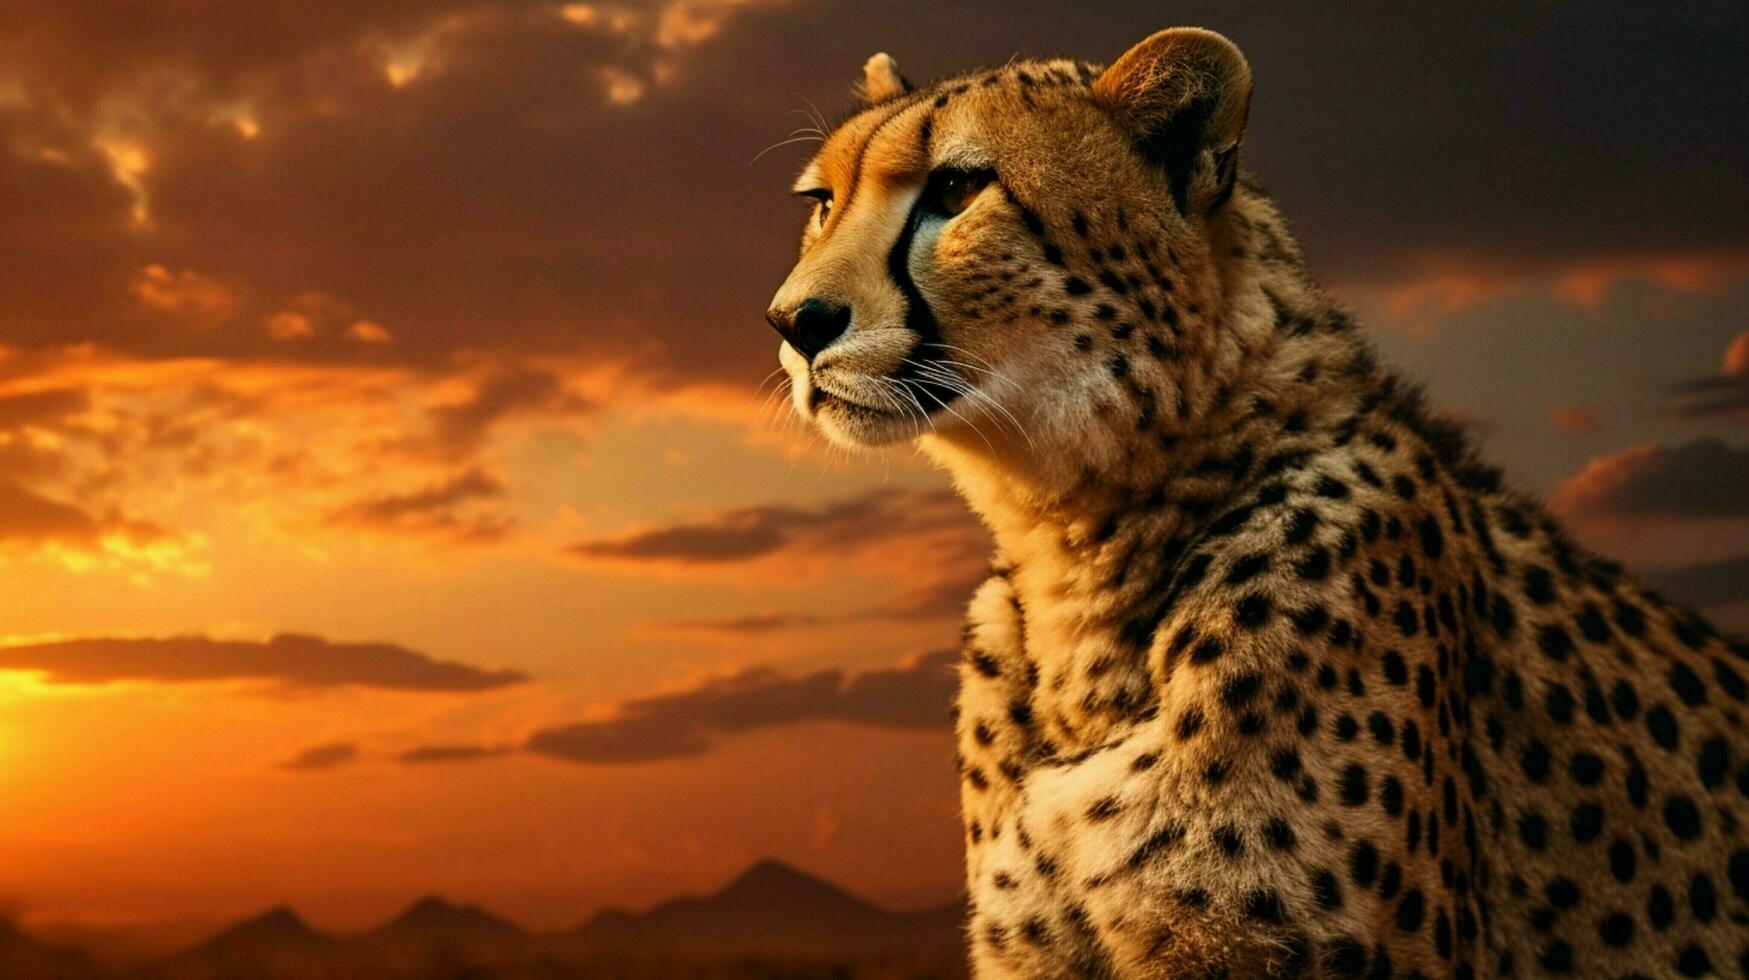 majestic cheetah staring into the sunset beauty photo